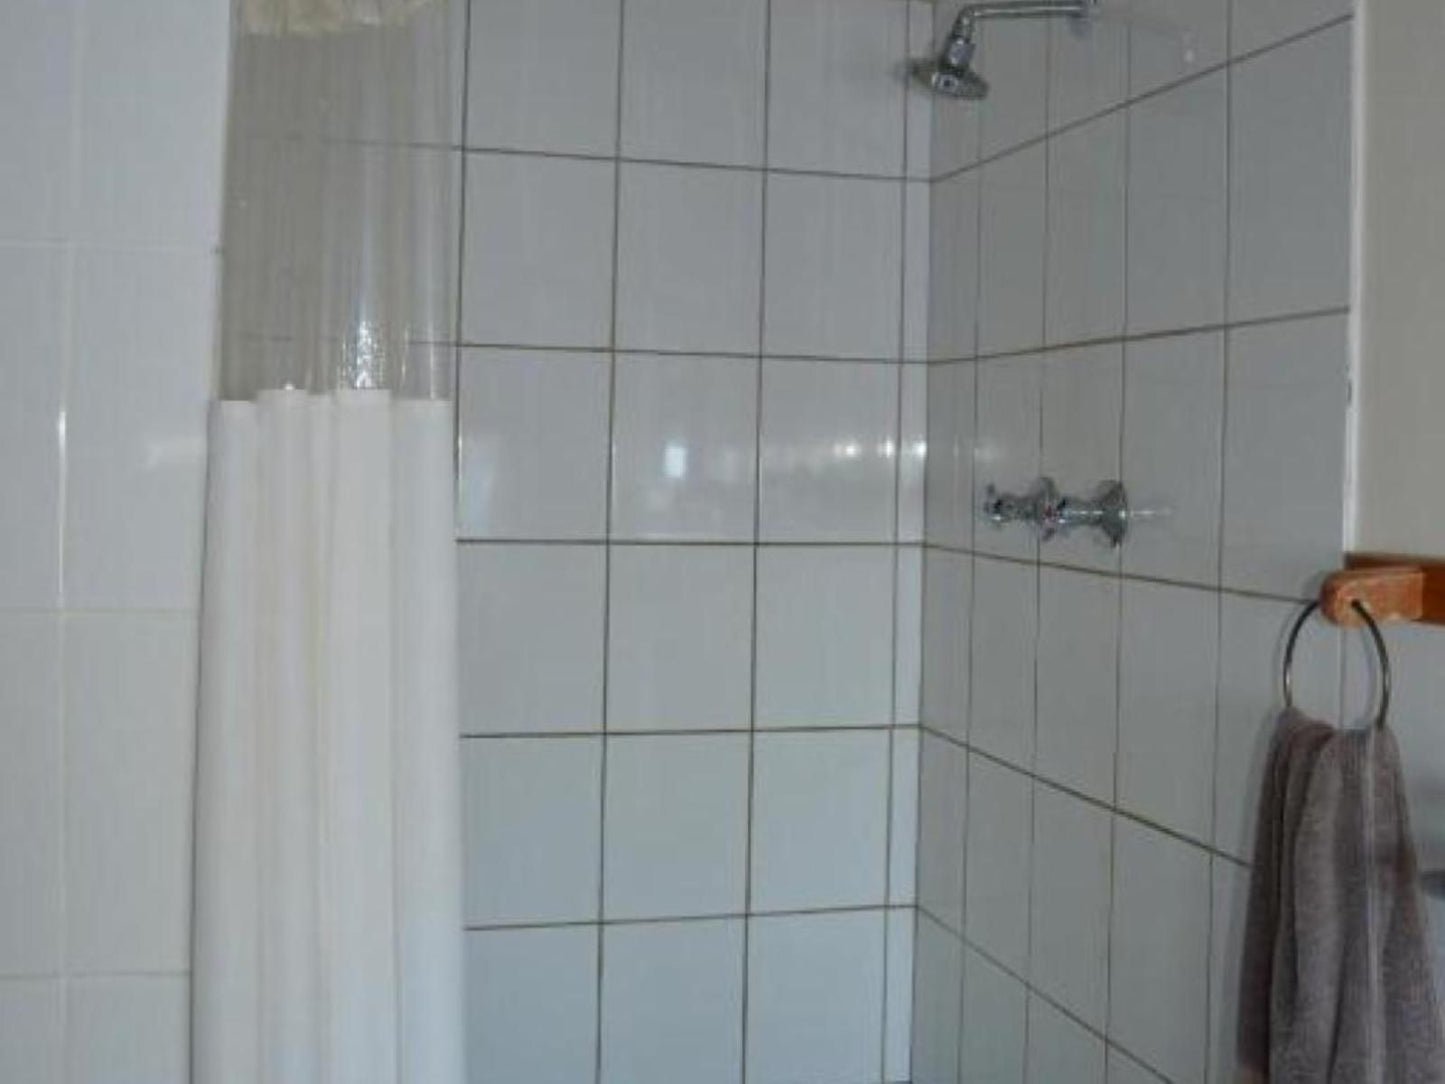 The George Hotel Eshowe Kwazulu Natal South Africa Colorless, Bathroom